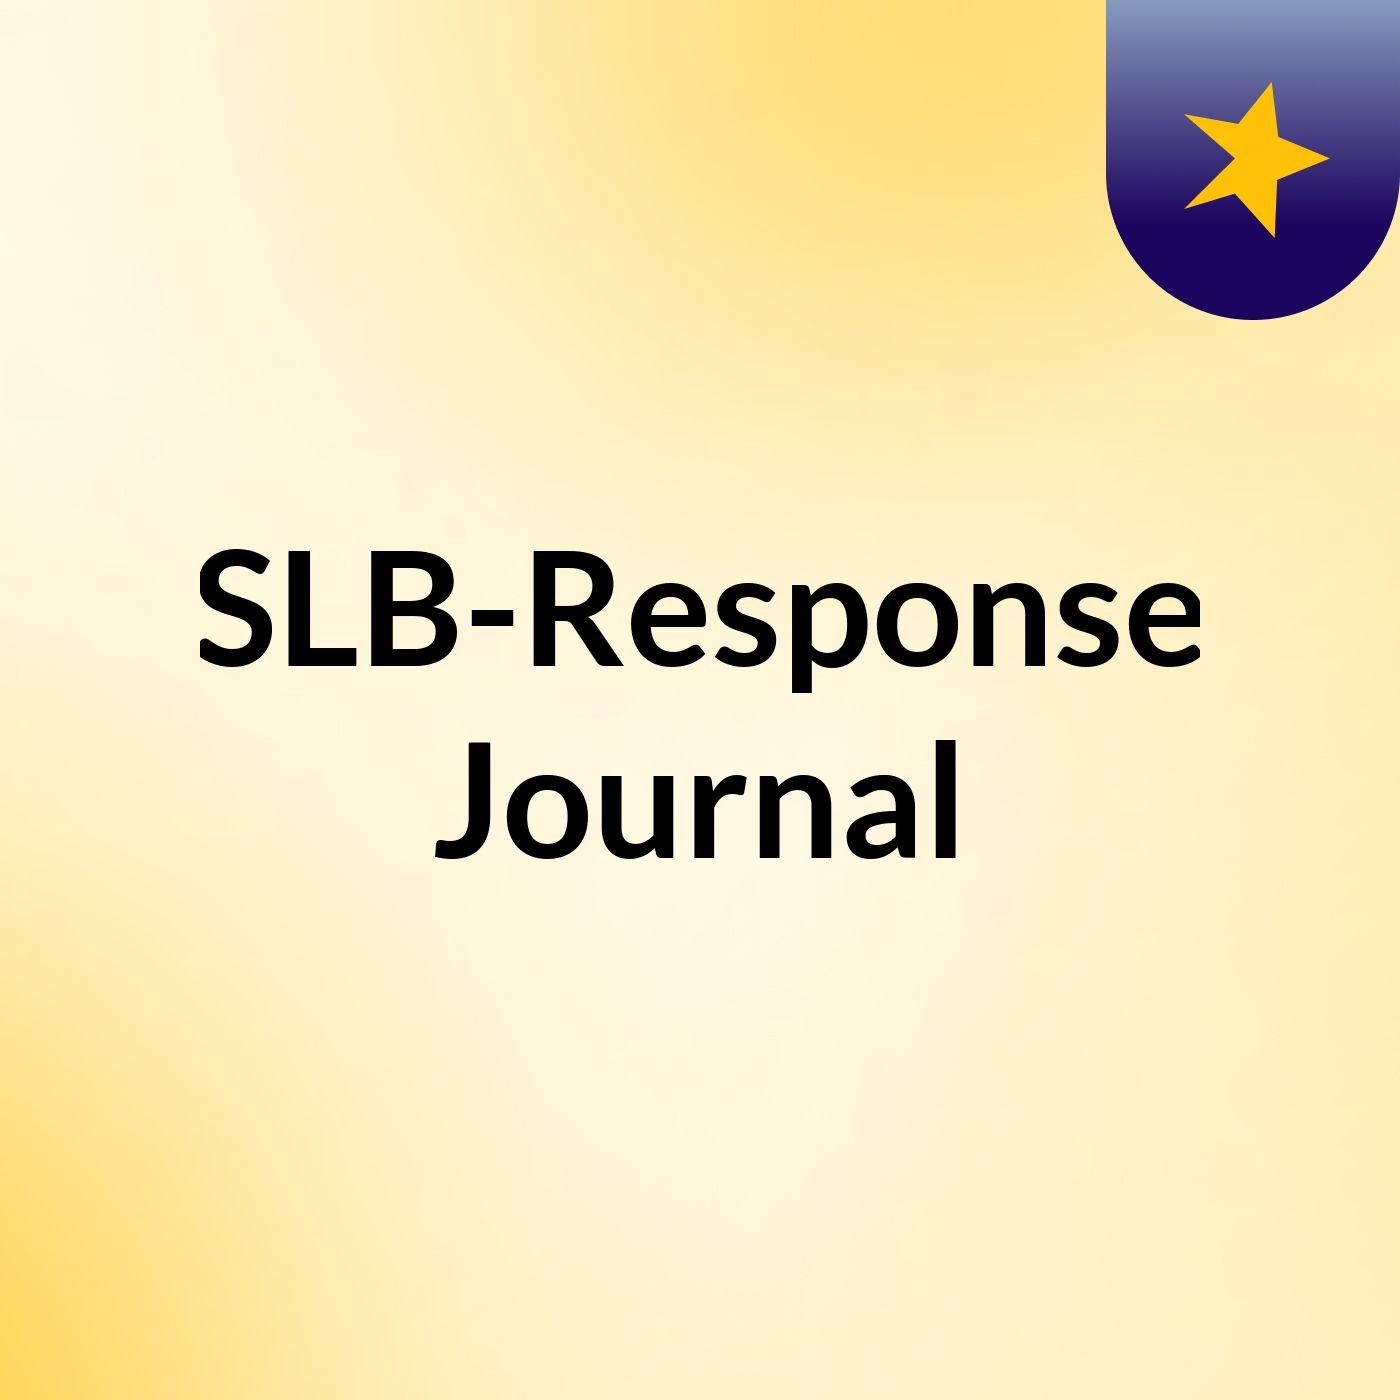 SLB-Response Journal